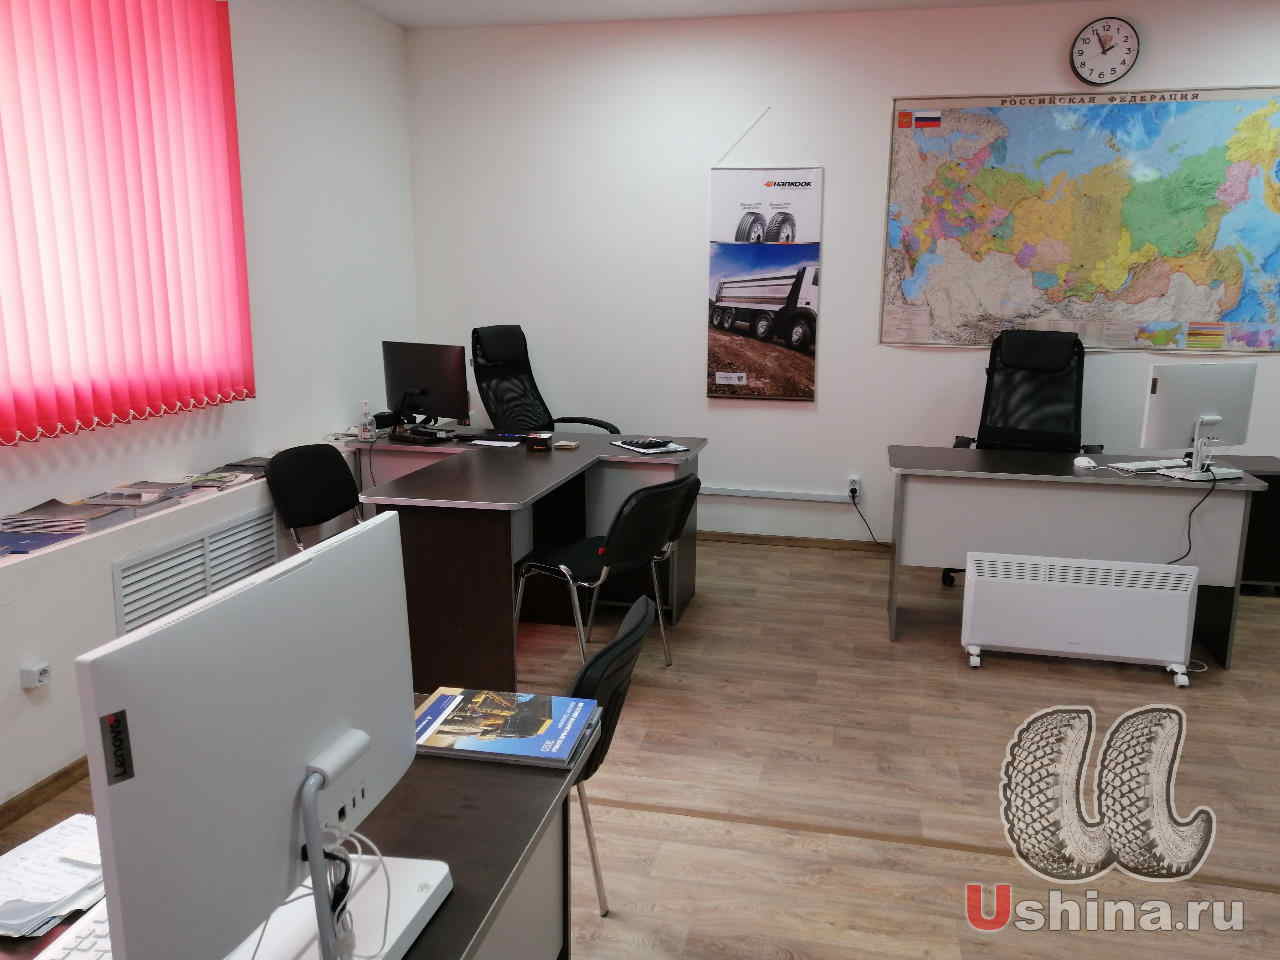 Офис Ushina.ru